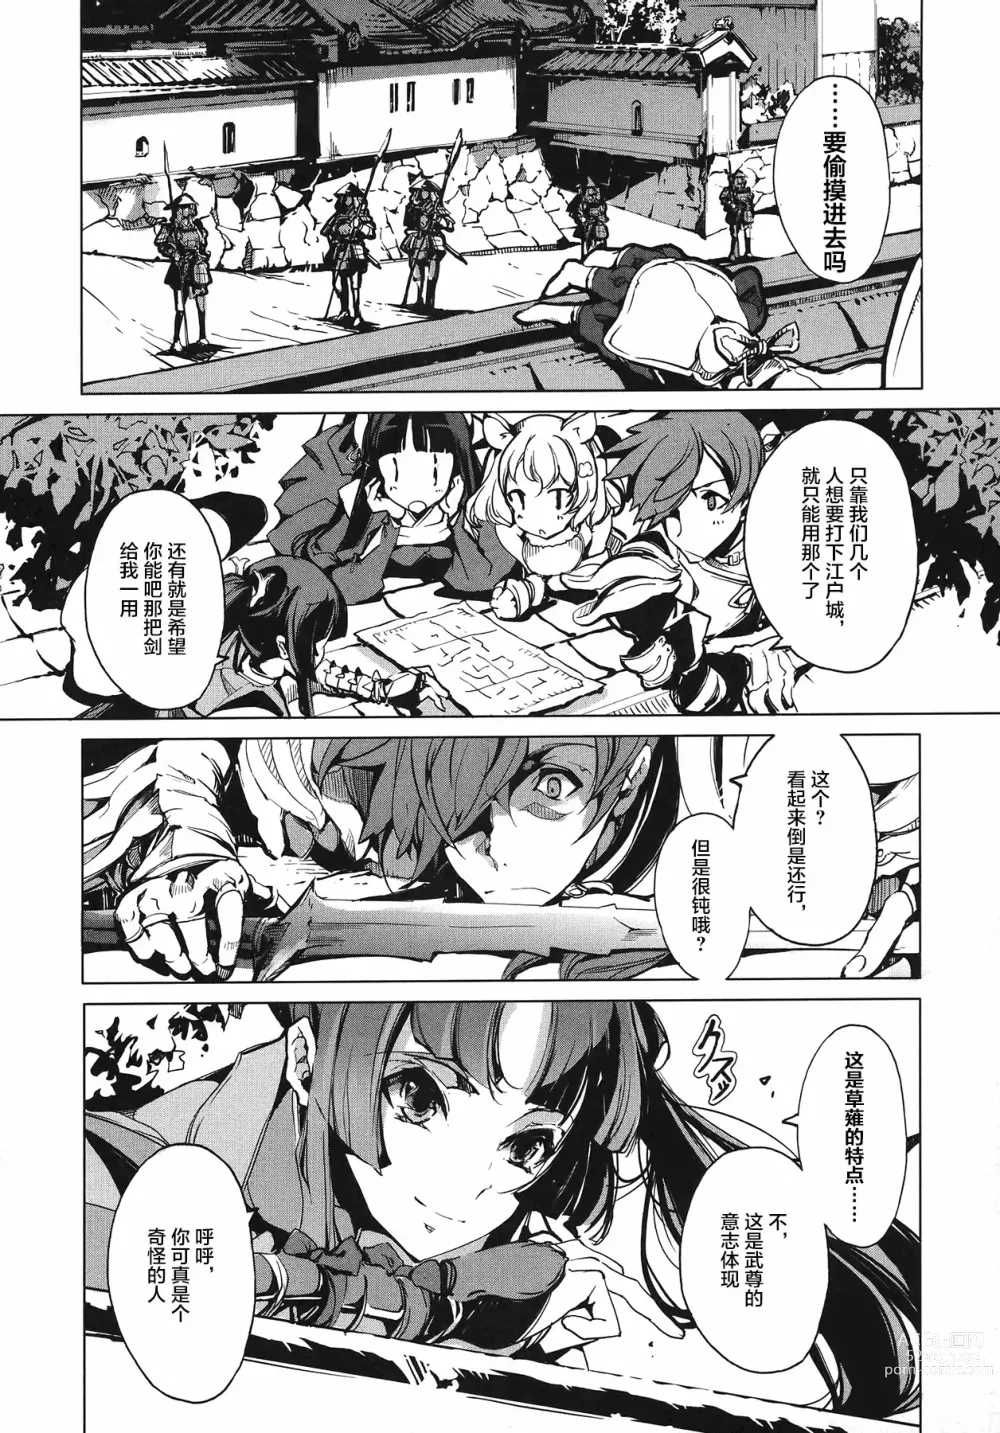 Page 21 of manga 英雄*戦姫 - The World Conquest 第1巻